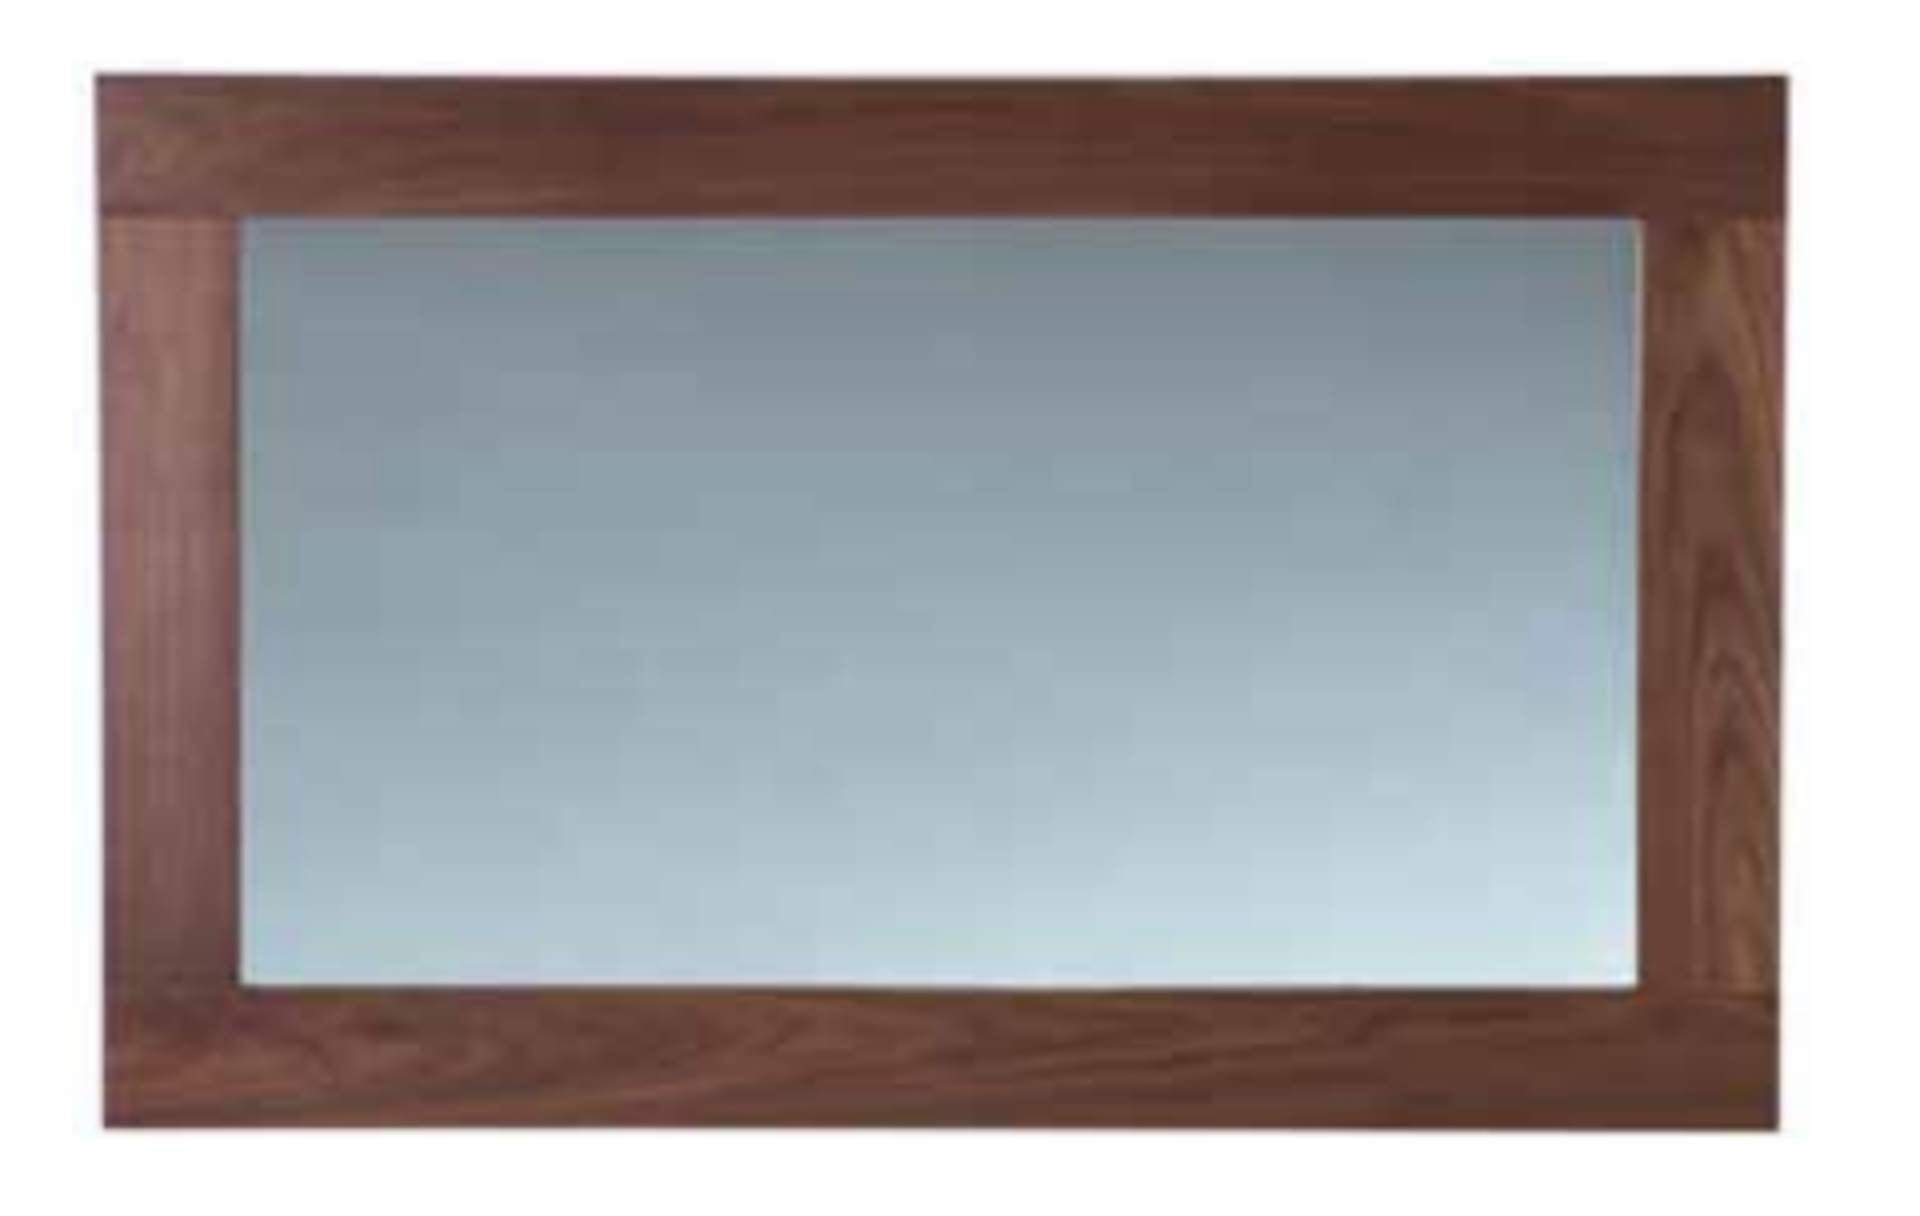 1 x Stonearth Extra Large Bathroom Wall Mirror Frame - American Solid Walnut Frame - Size: W1500mm